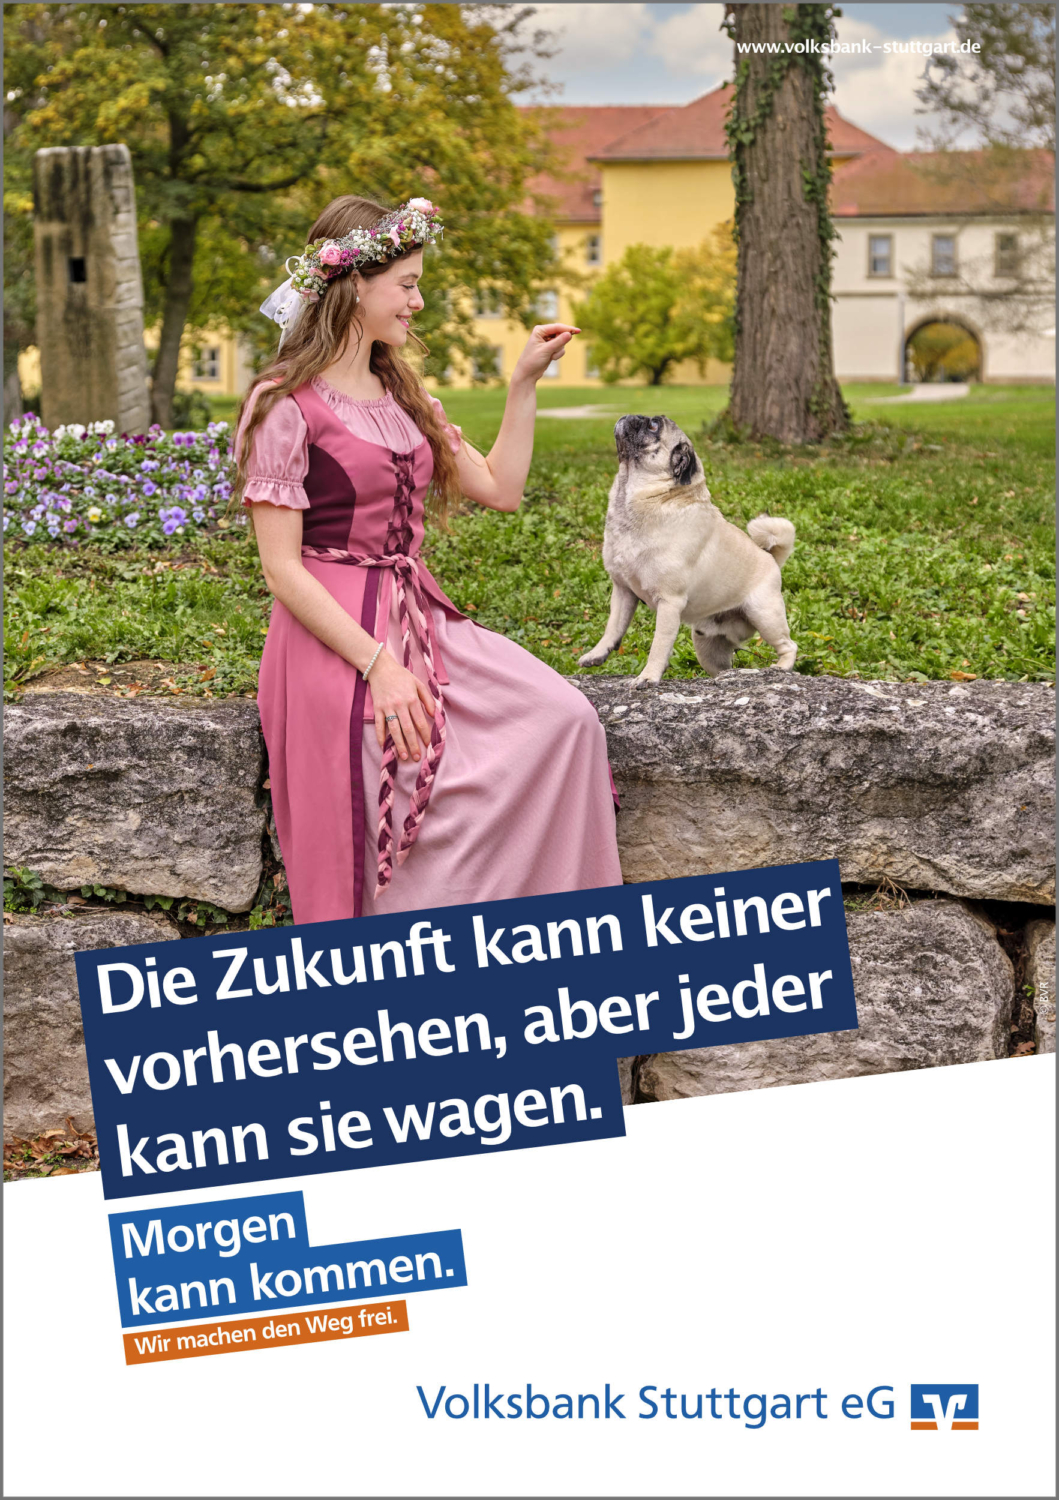 Kampagnen Fotografie Stuttgart und Umgebung Volksbank Stuttgart e.G. Winnender Mädele 2020 Mops Willi Schlosspark Winnenden Klinikum Winnenden